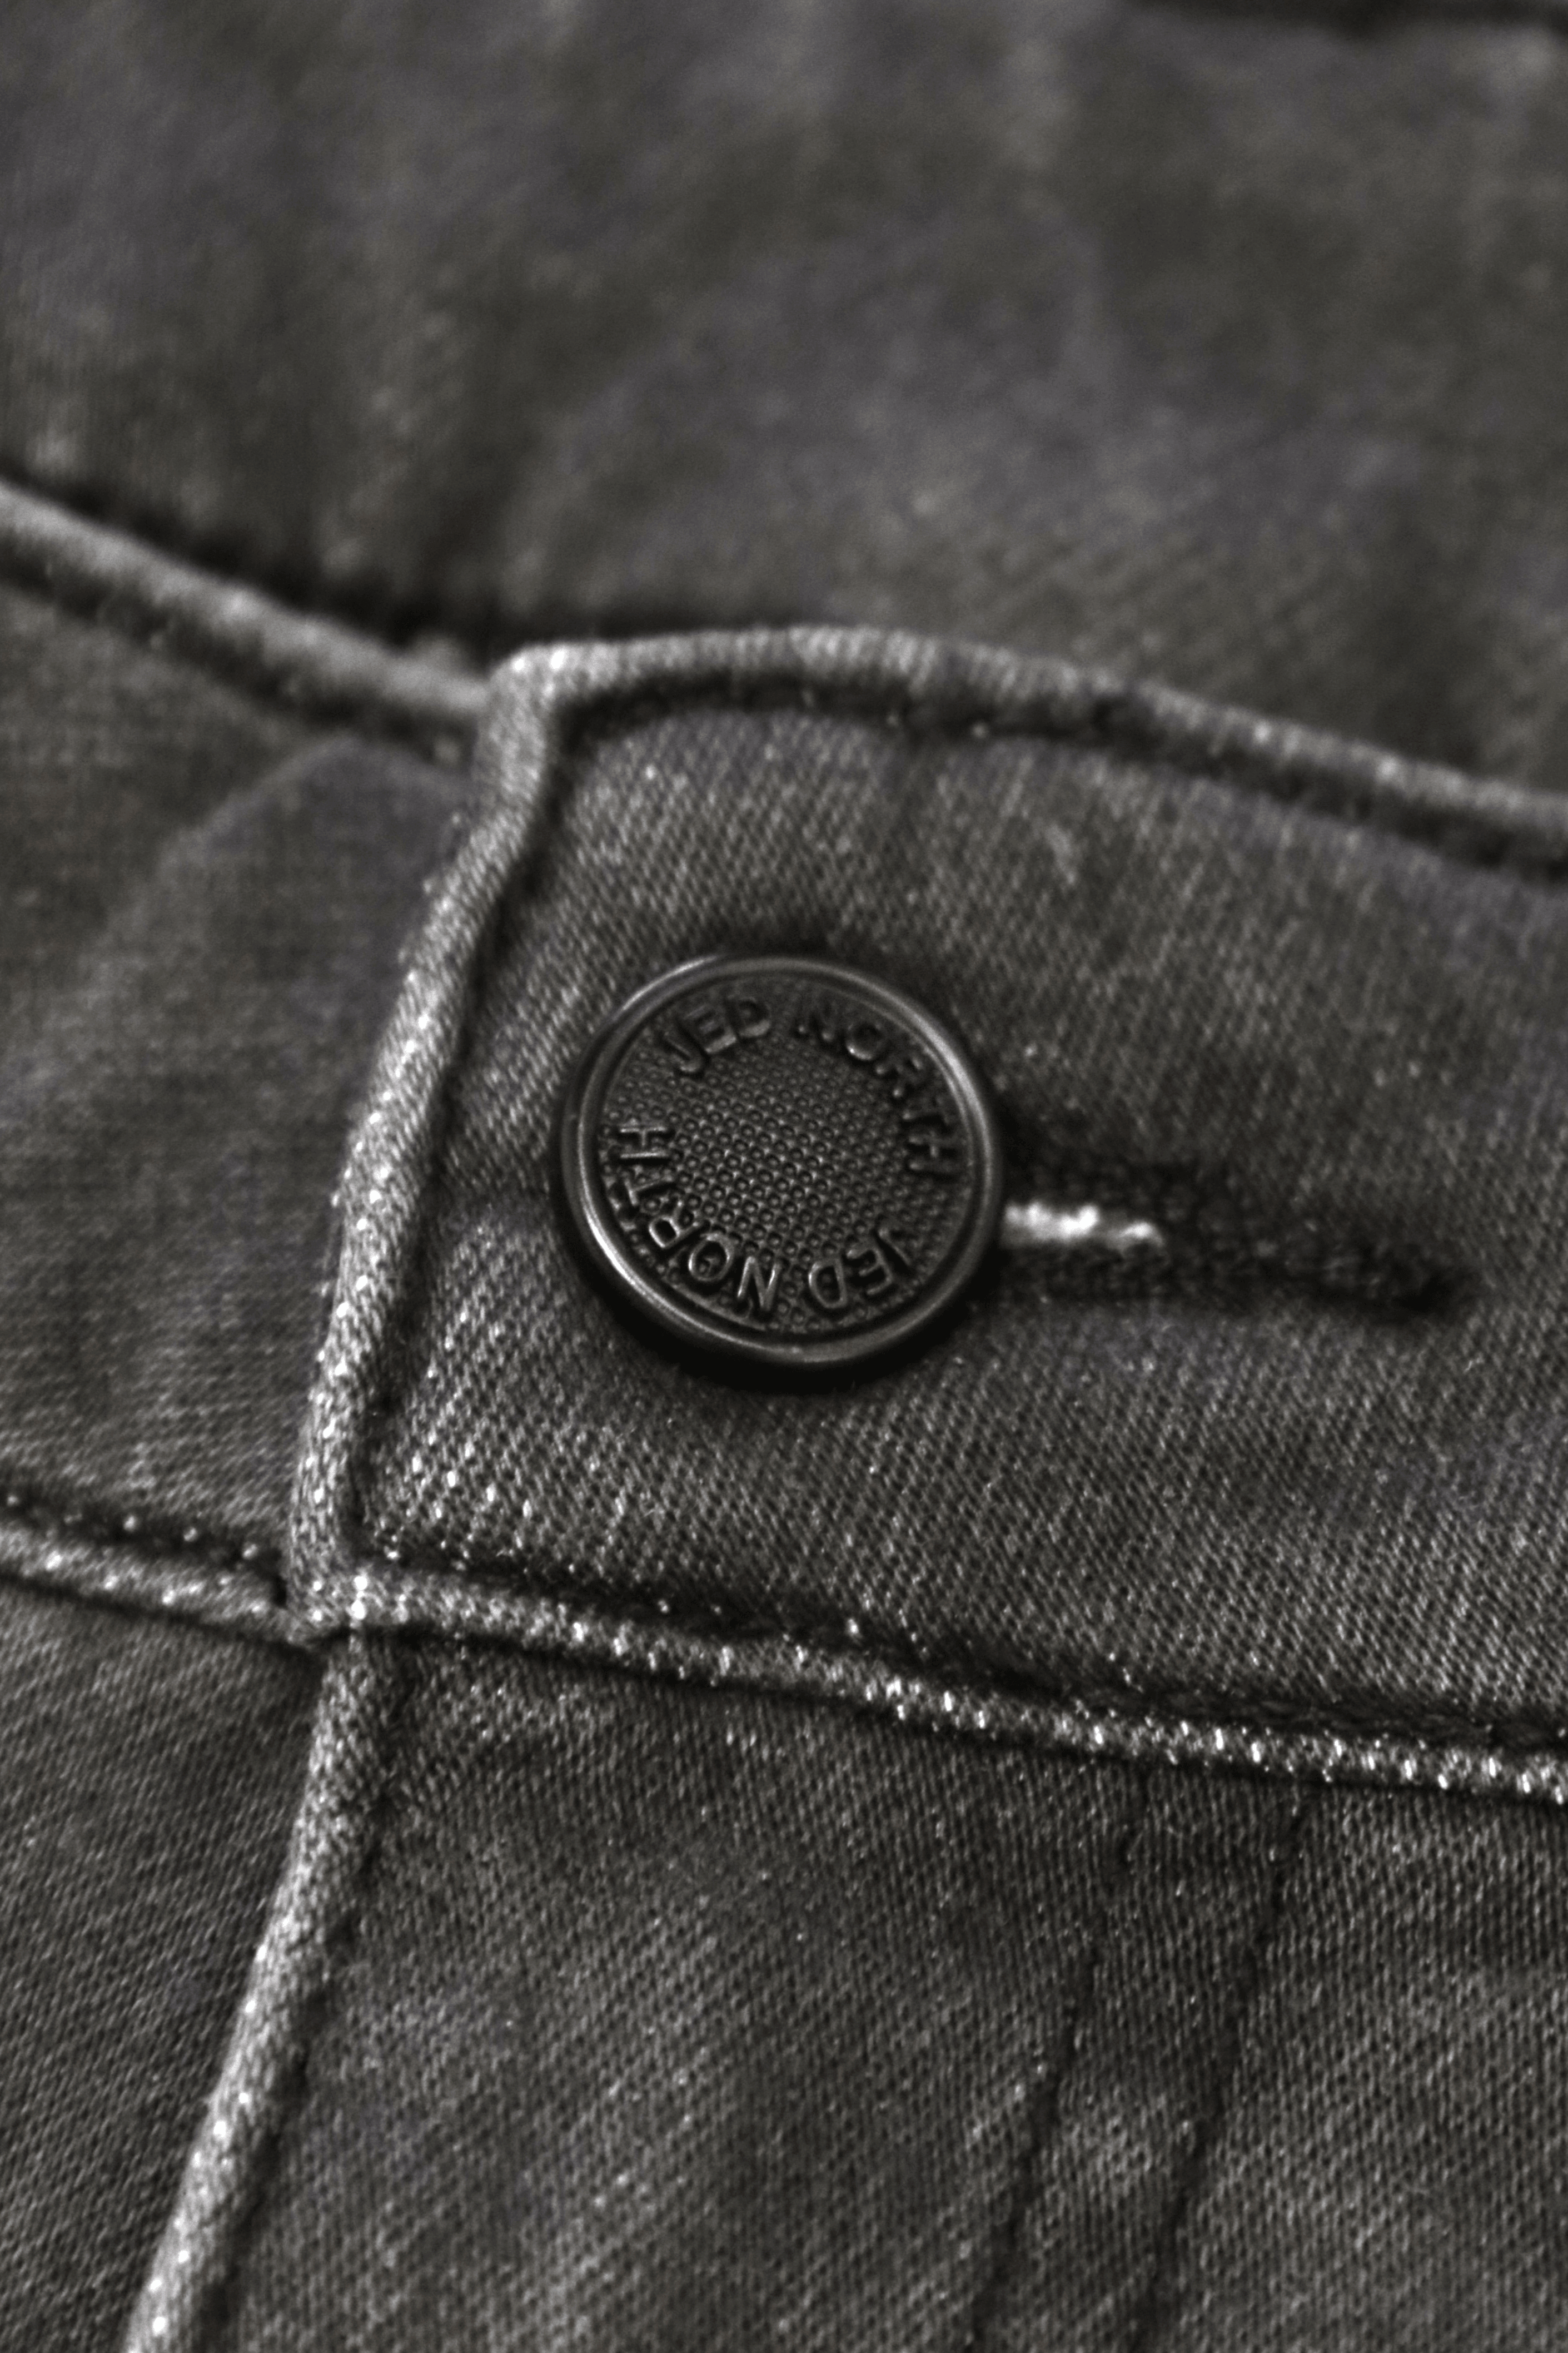 Men's Rolled Hem Denim Shorts - Dark Gray - Jed North